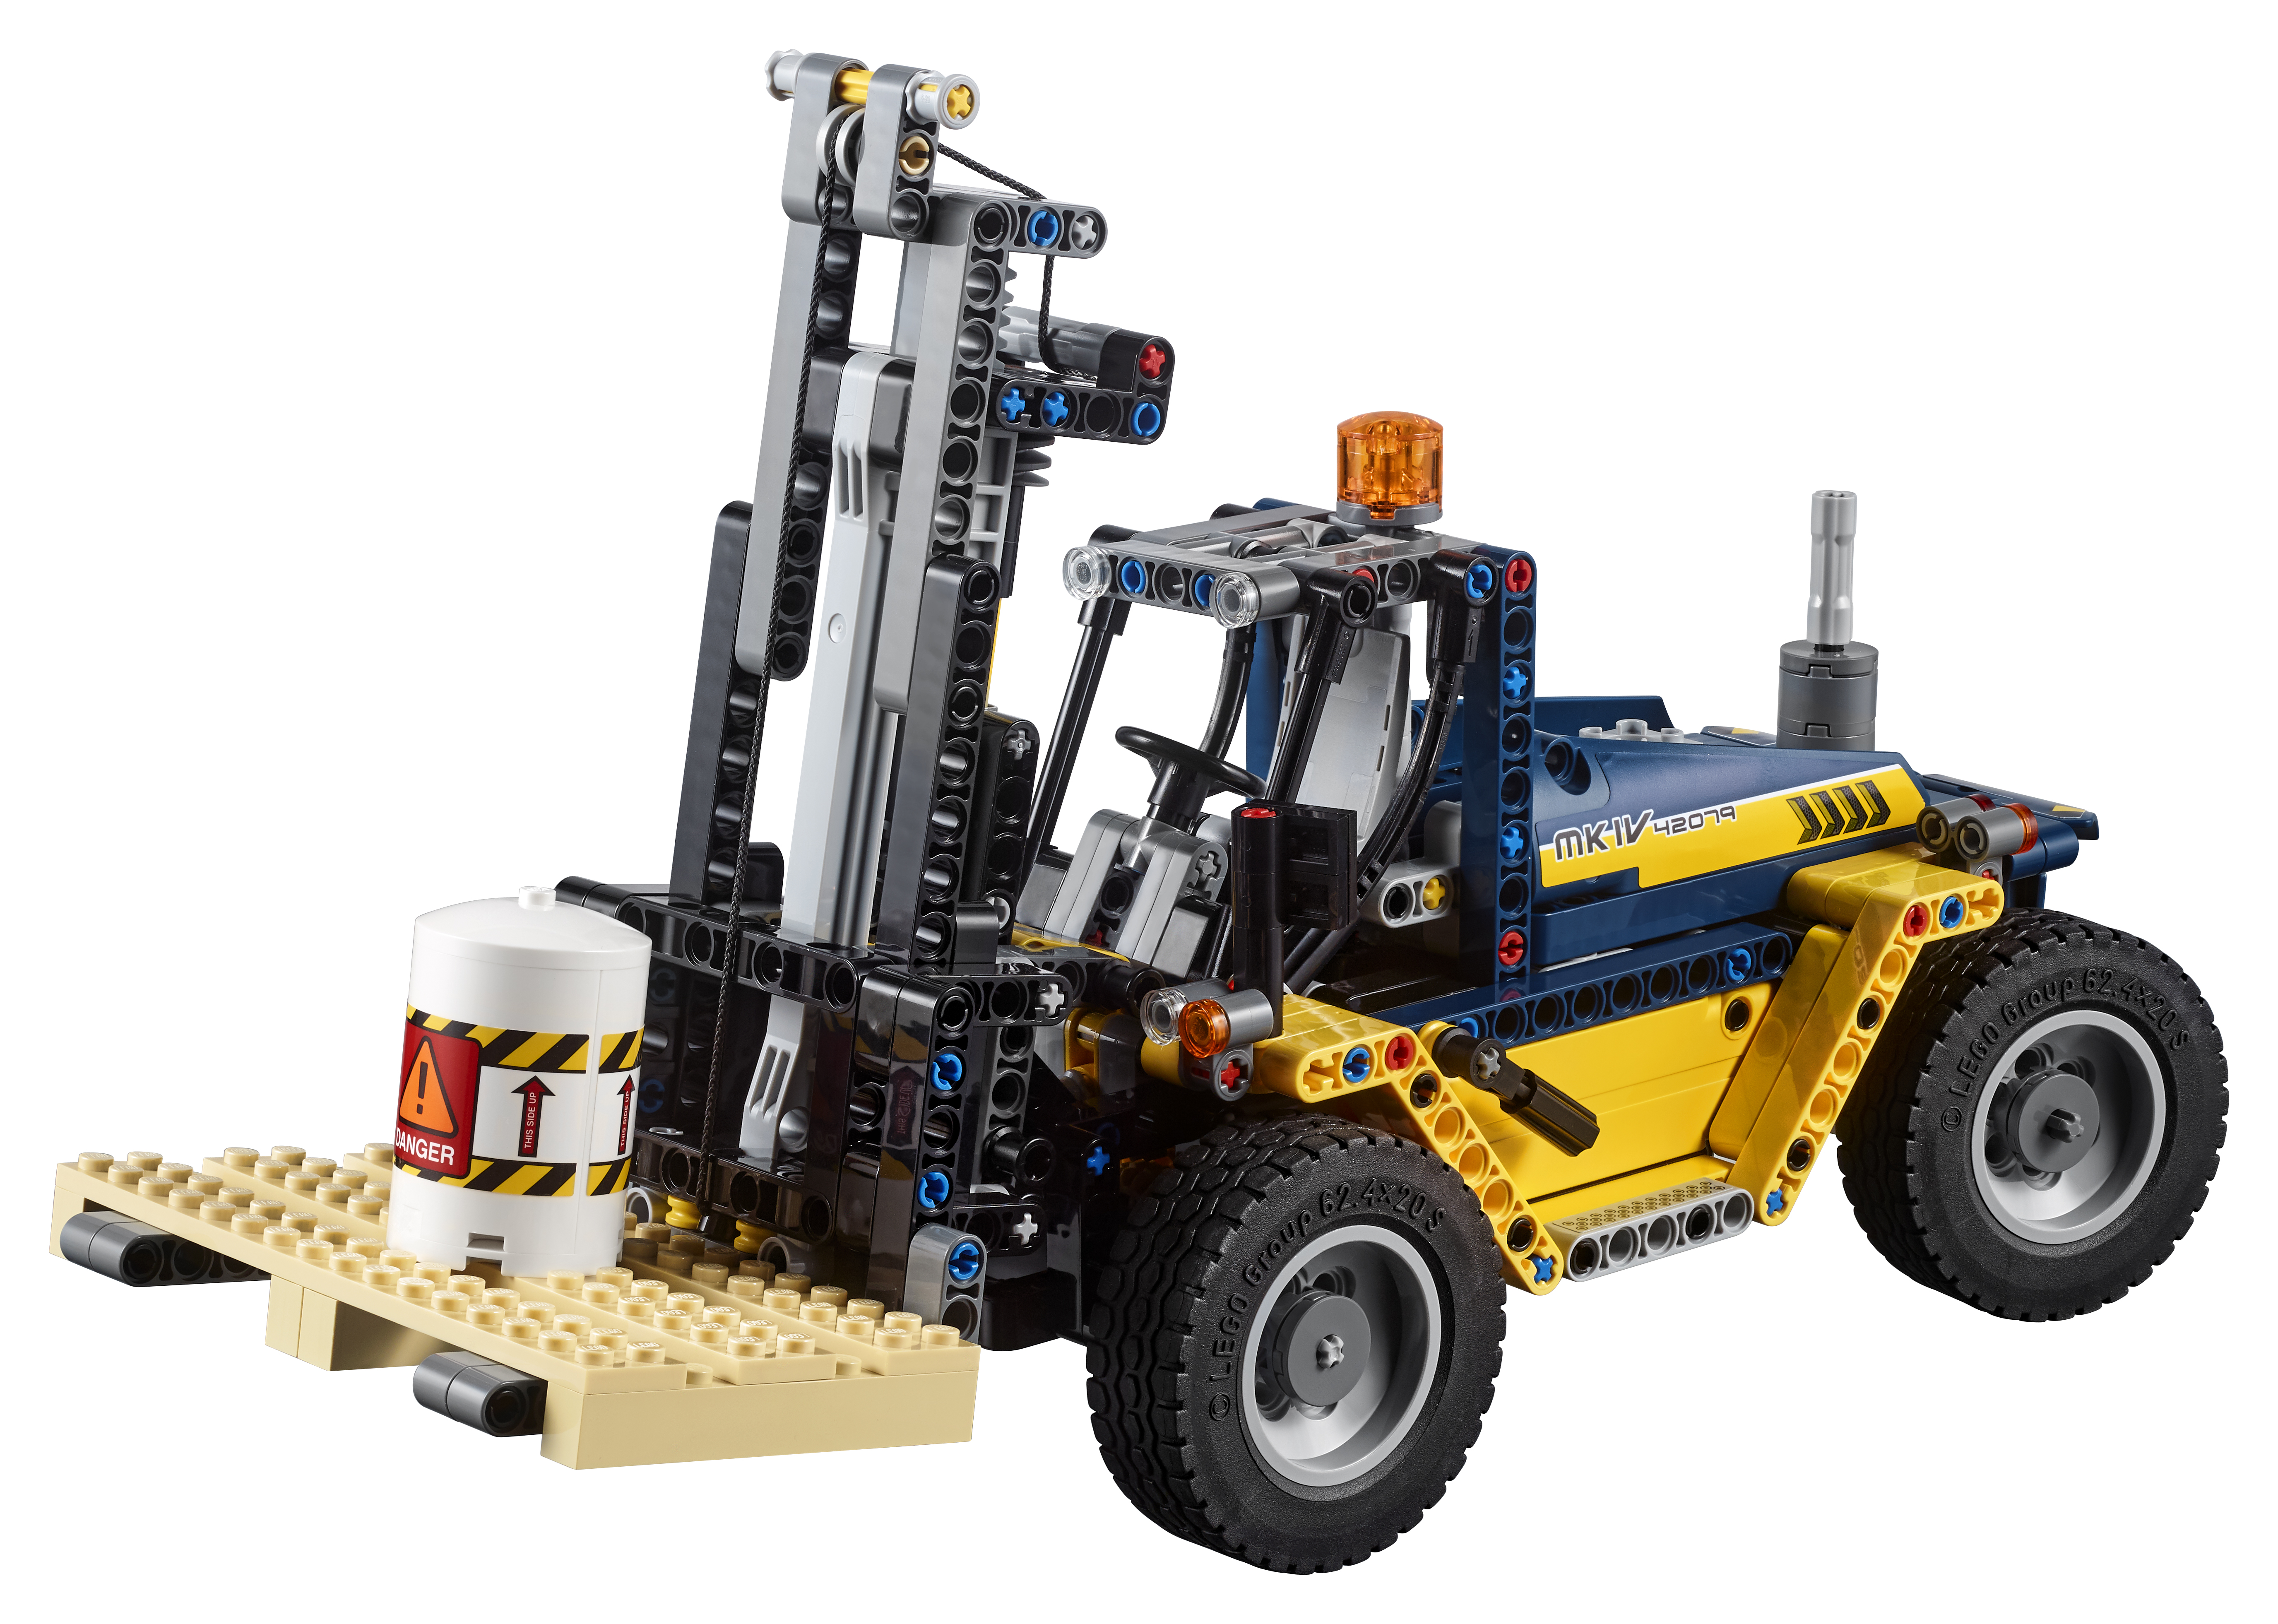 Preview of LEGO Technic Fall Assortment - FBTB